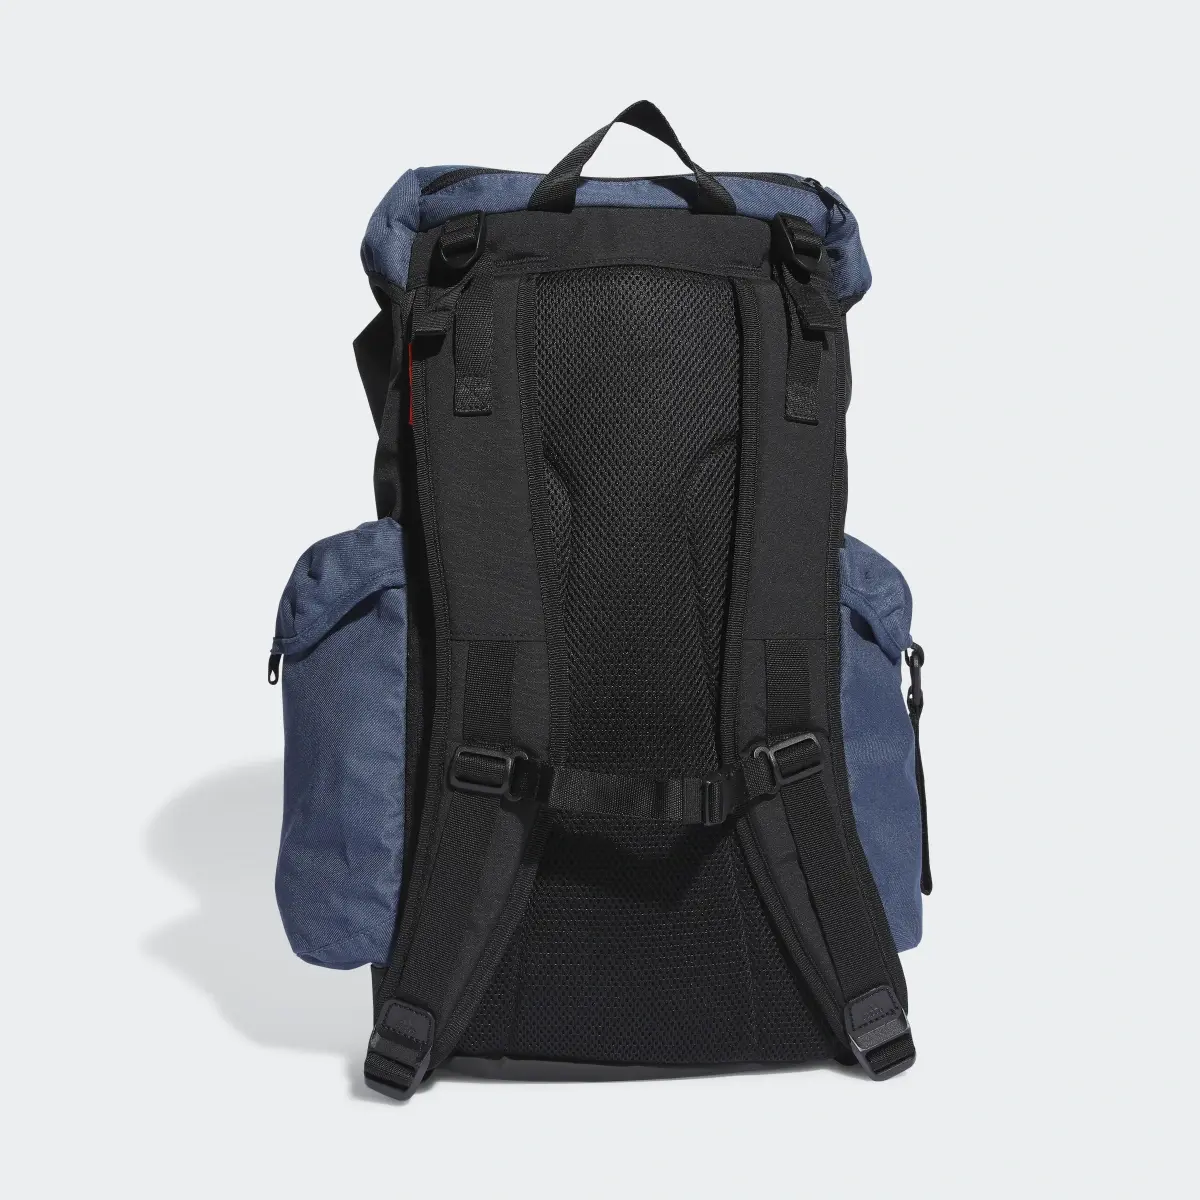 Adidas City Xplorer Backpack. 3